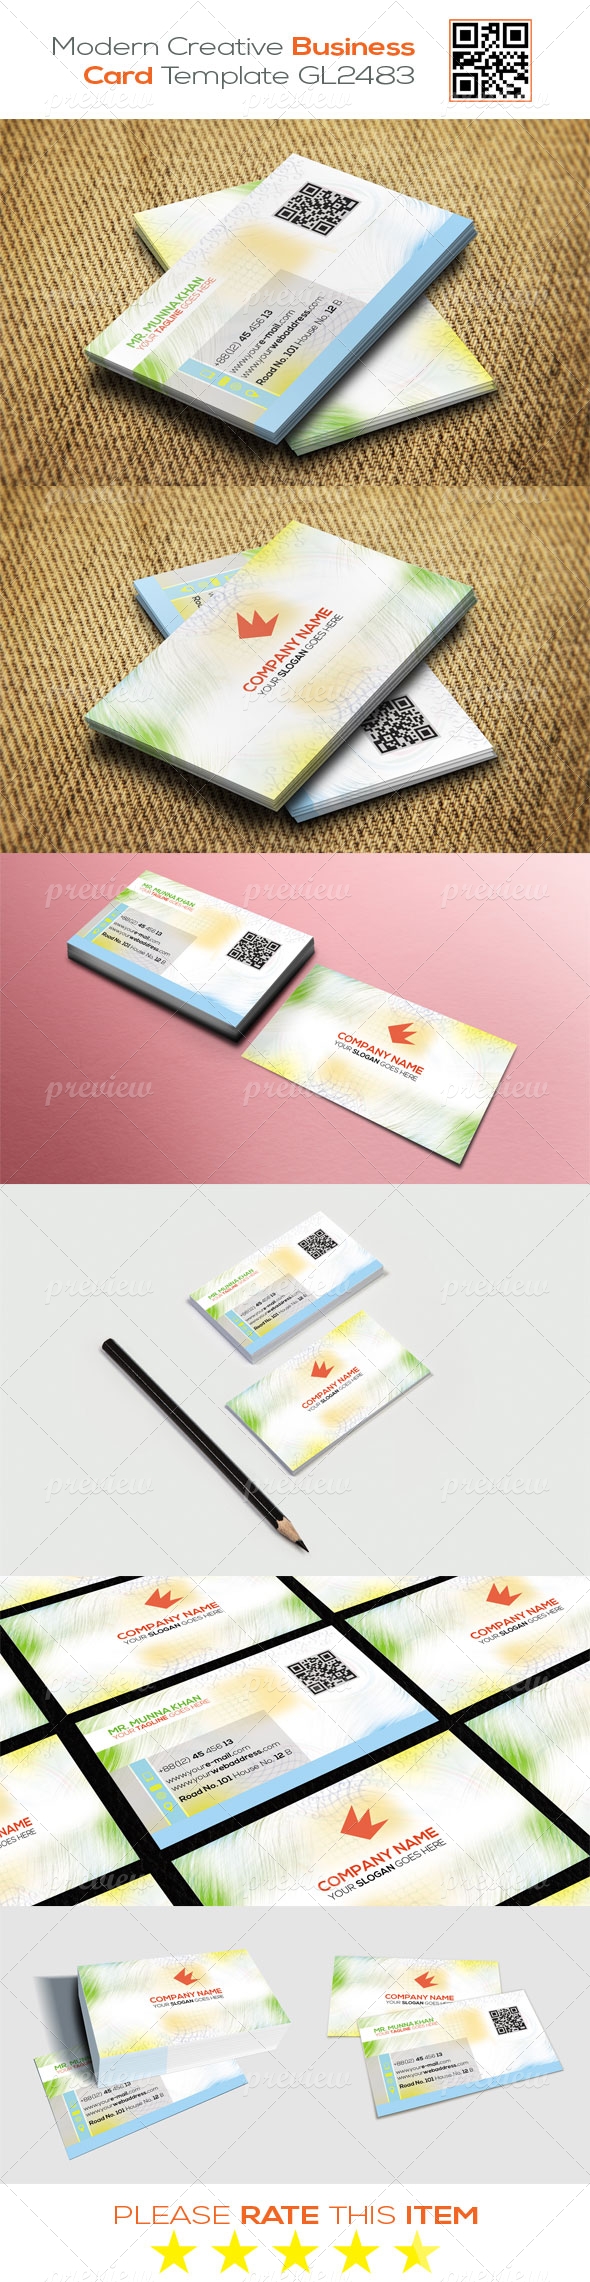 Modern Creative Business Card Template GL2483